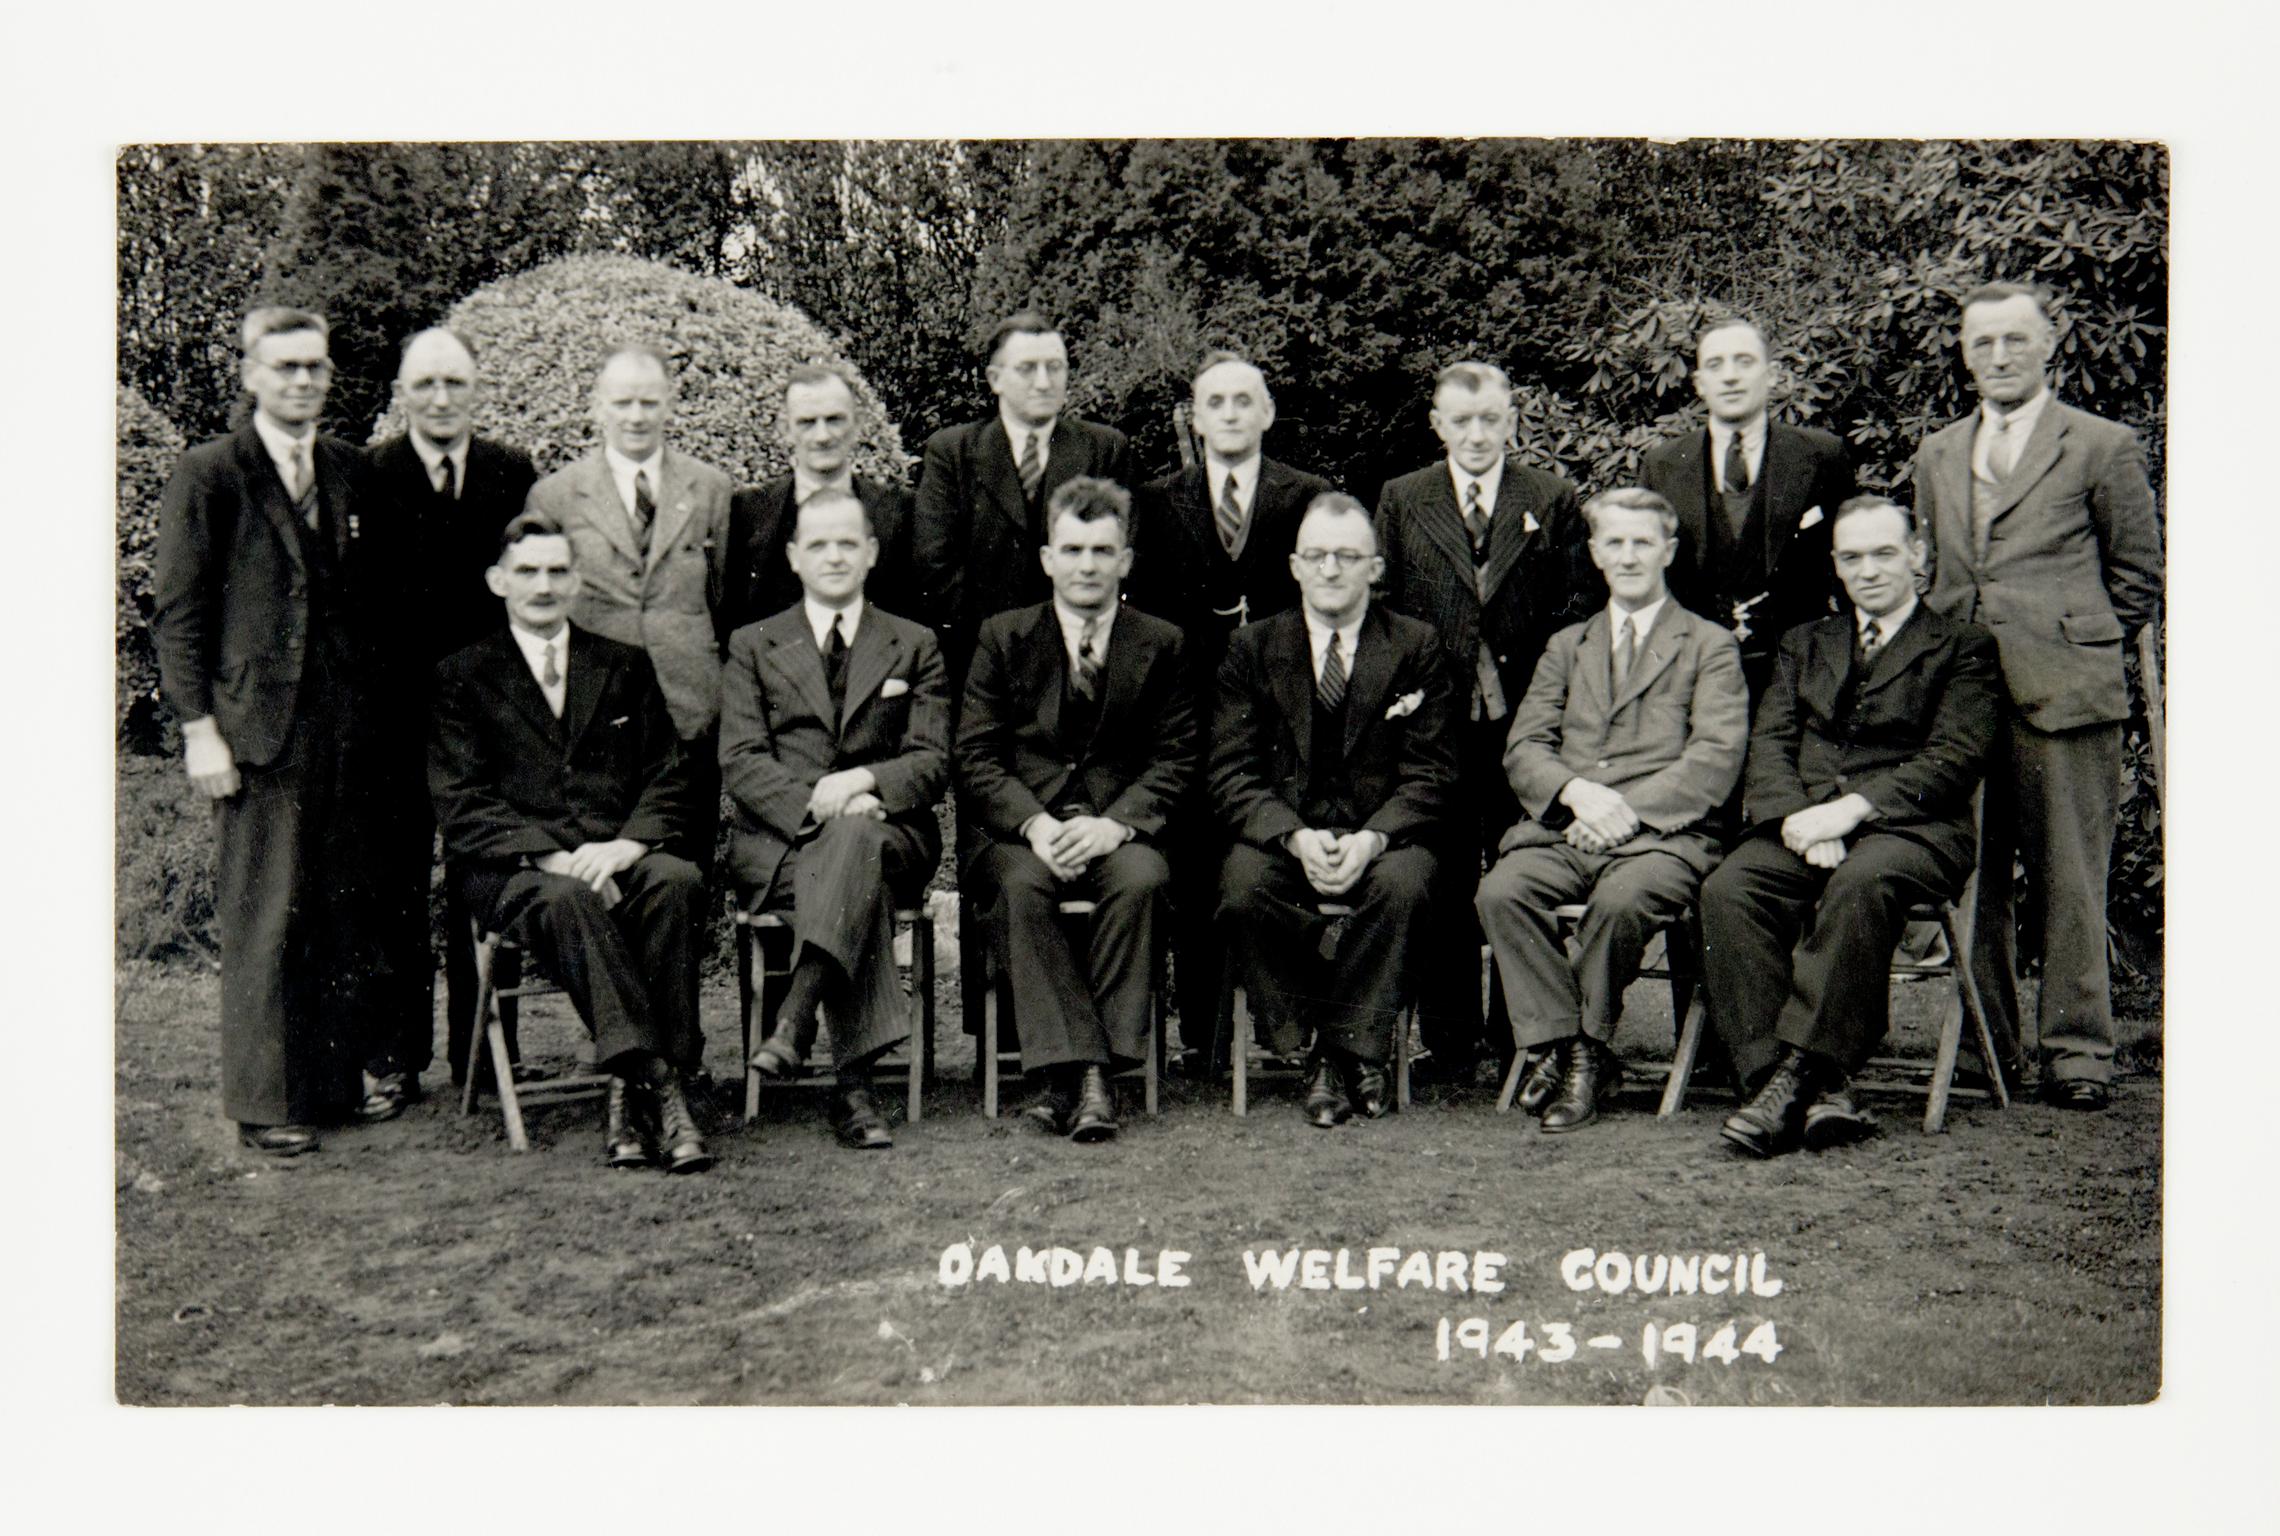 Oakdale Welfare Council 1943-1944 (photograph)